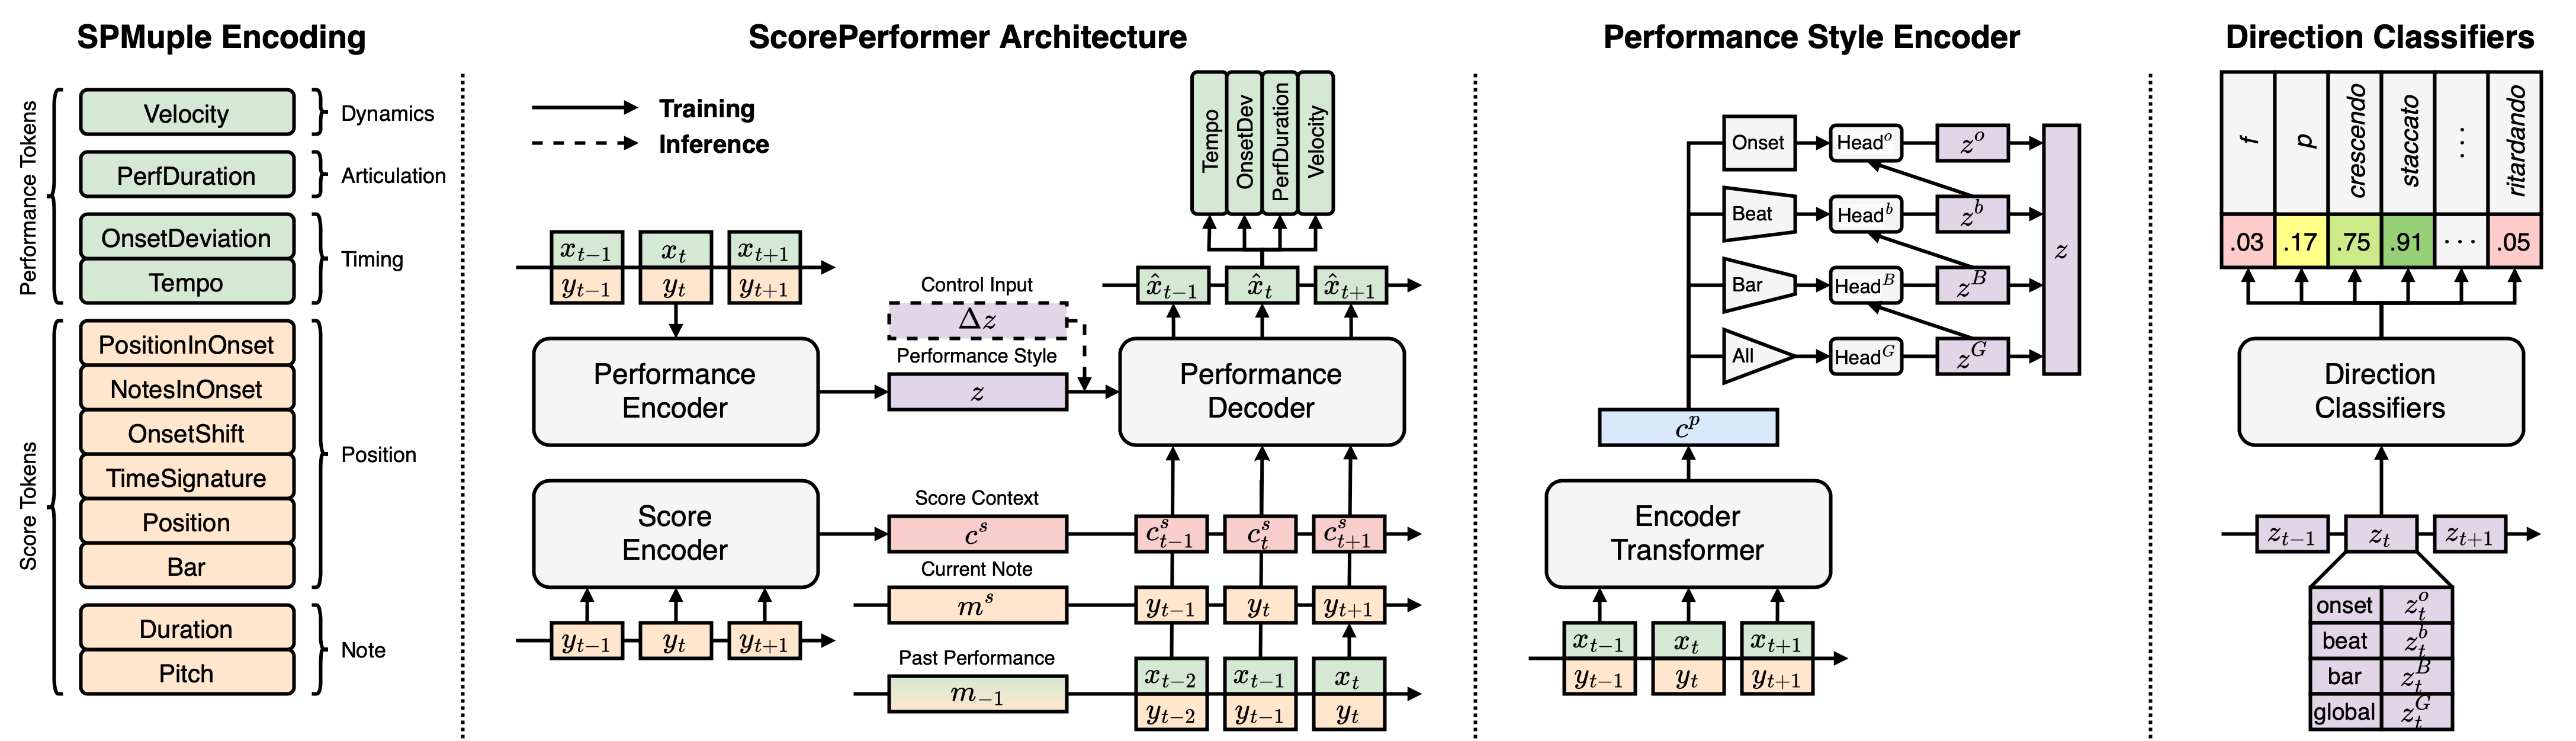 ScorePerformer architecture